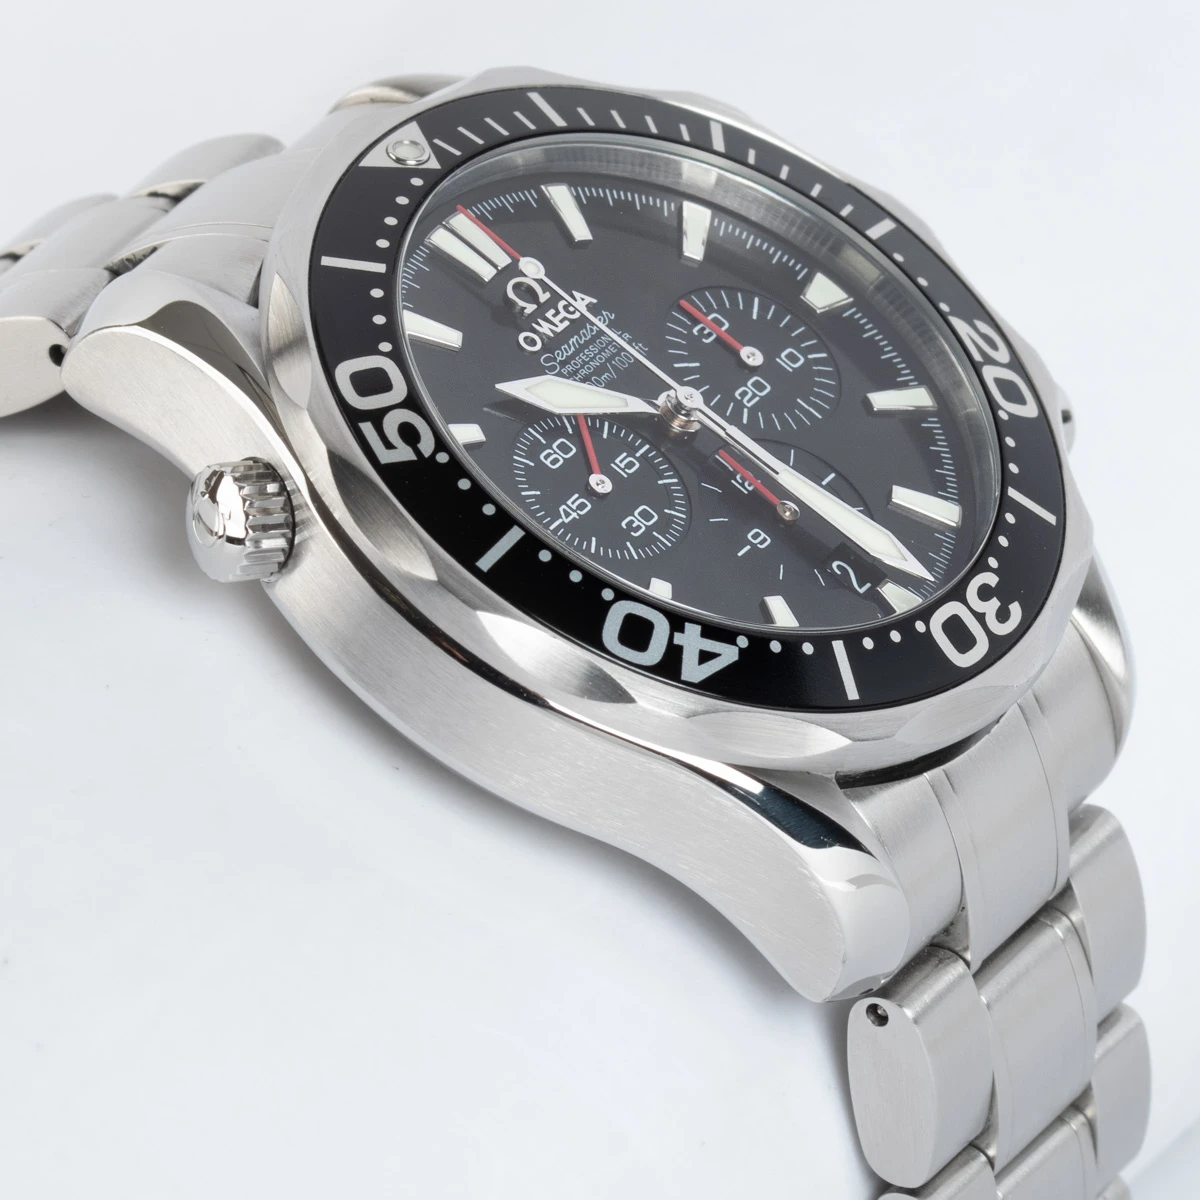 2007 Omega Seamaster Chronograph Diver / Black / Stainless Steel 2594.52.00 Listing Image 3